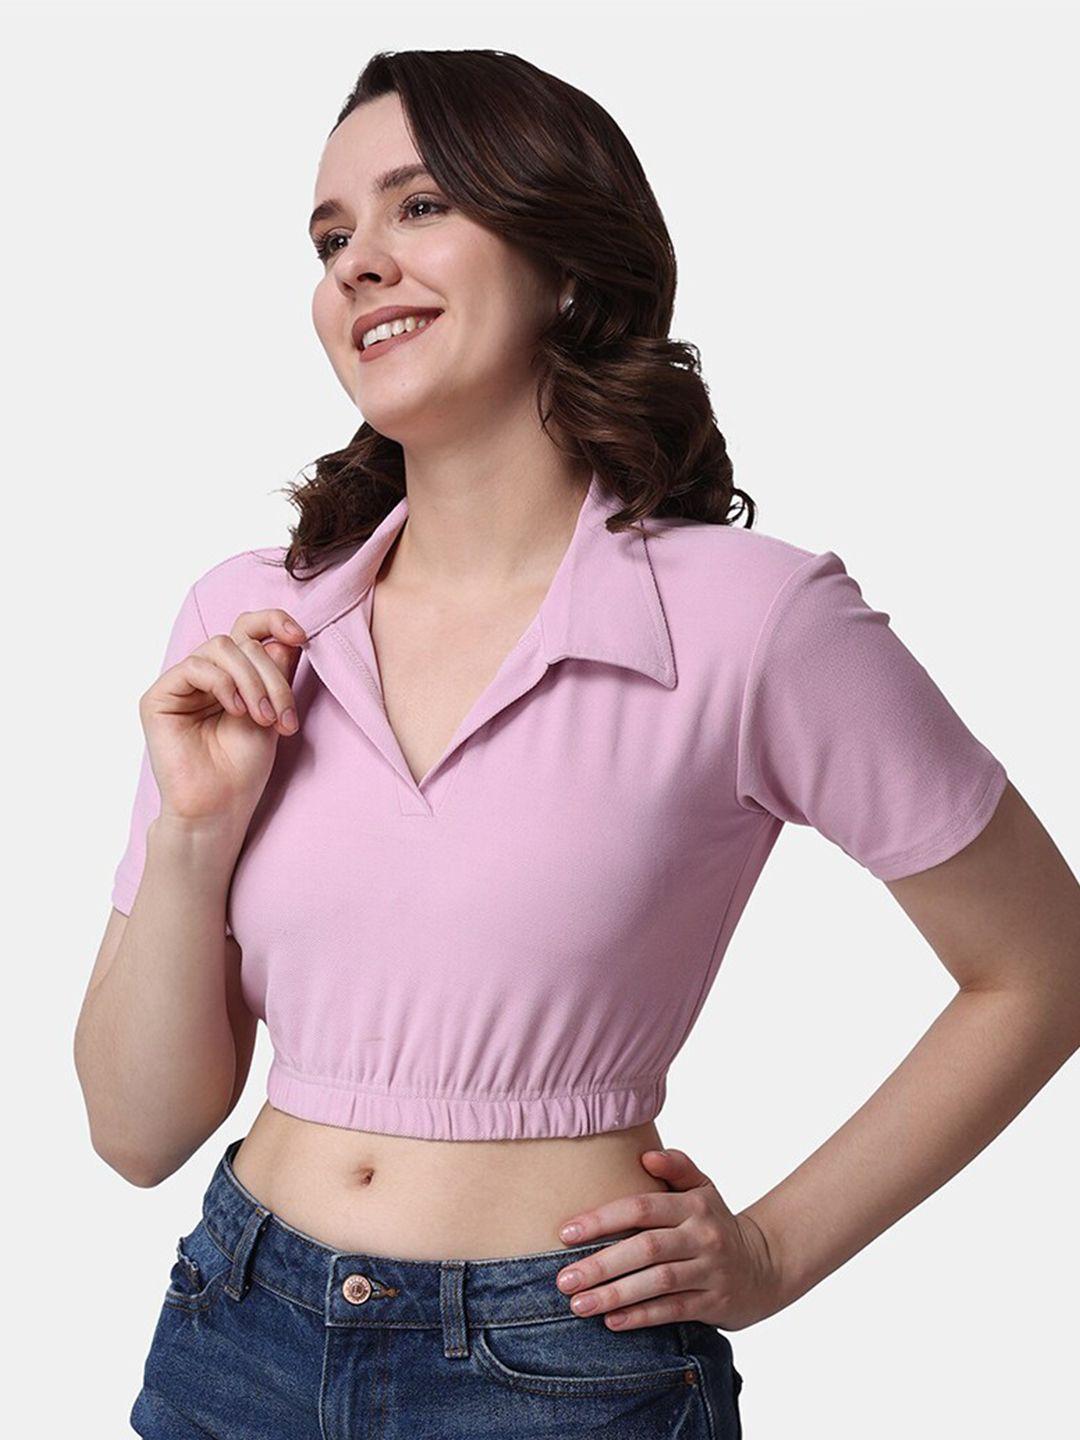 popwings pink shirt style crop top